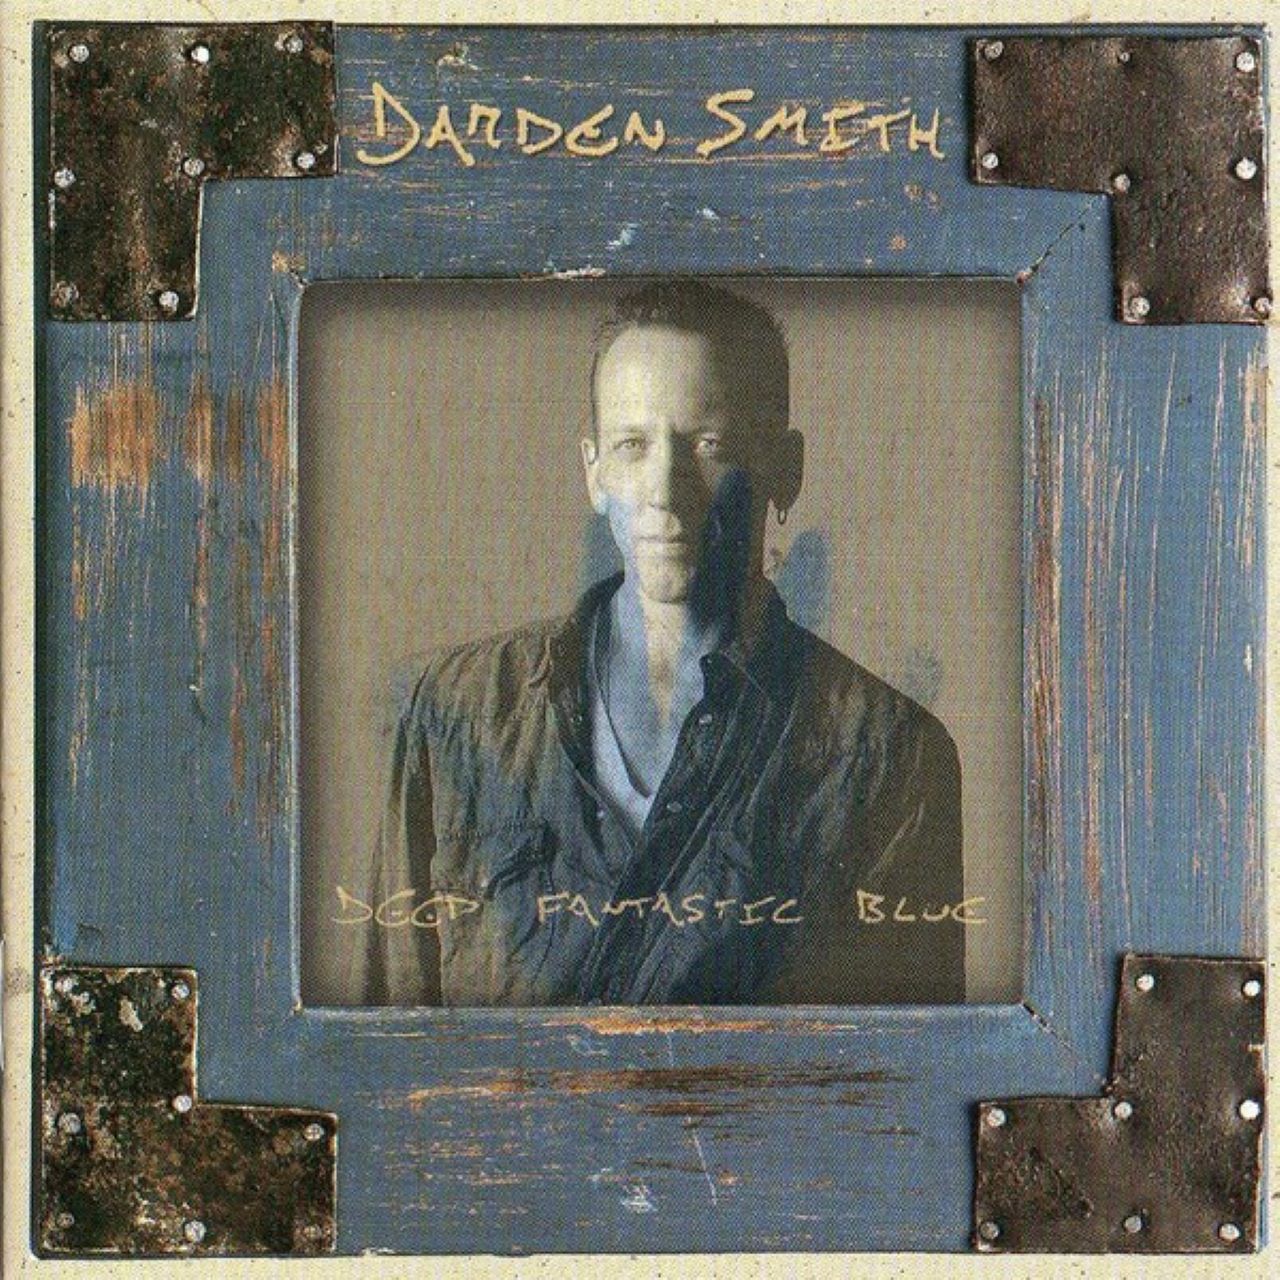 Darden Smith - Deep Fantastic Blue cover album